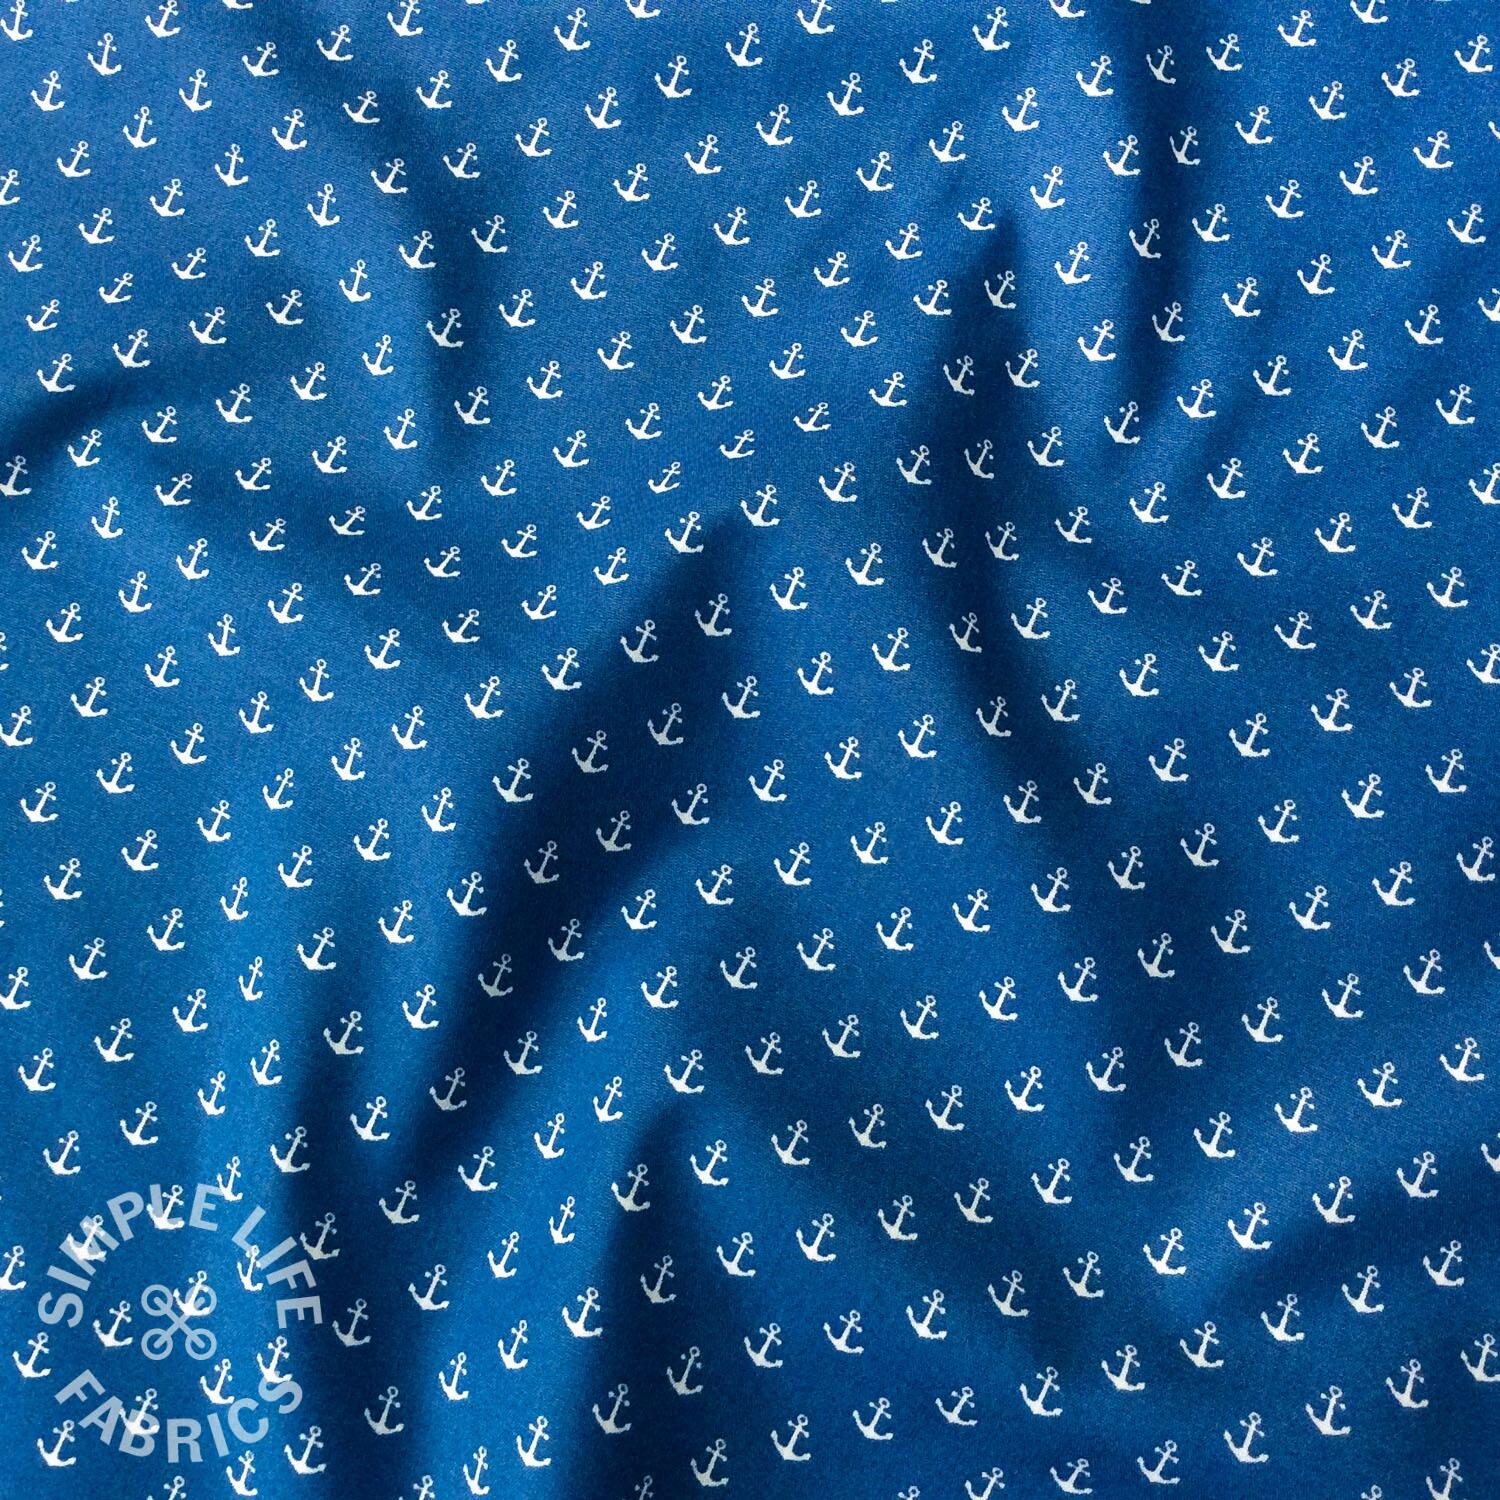 Mini Anchors, cotton poplin fabric, Blue - Oeko-Tex - Per half metre